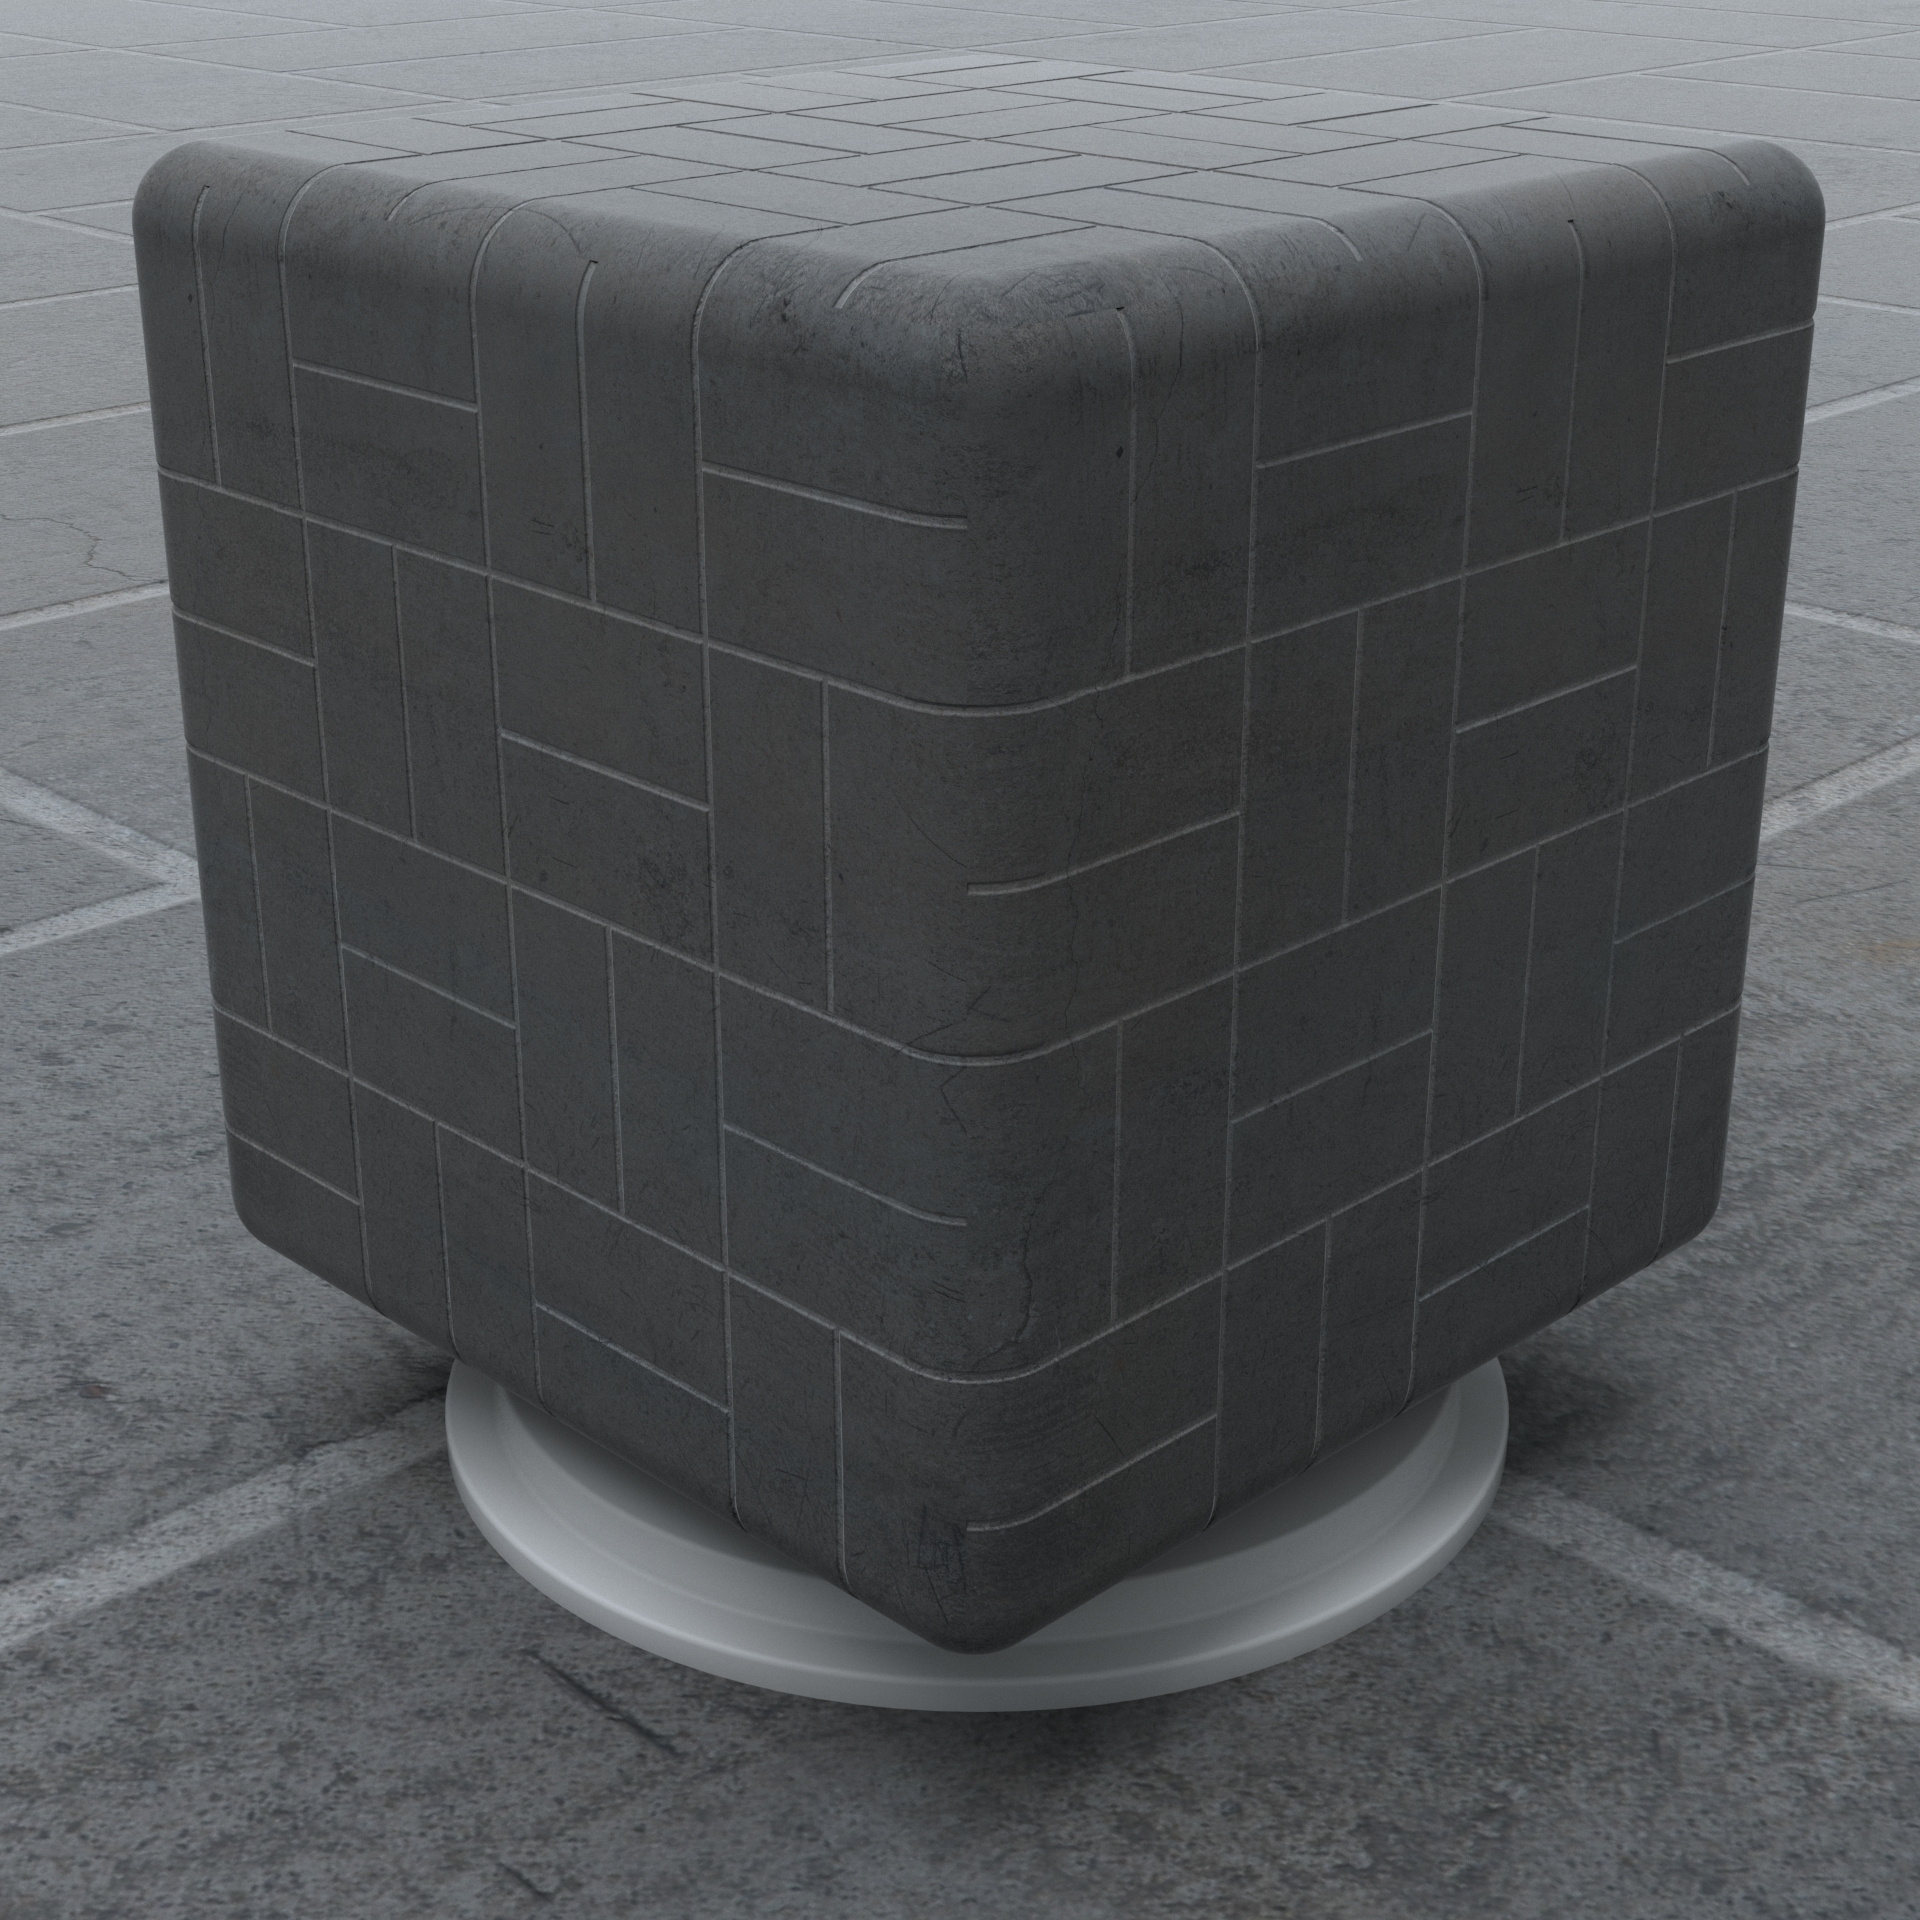 Concrete Tiles Worn AI01 Preview.jpg